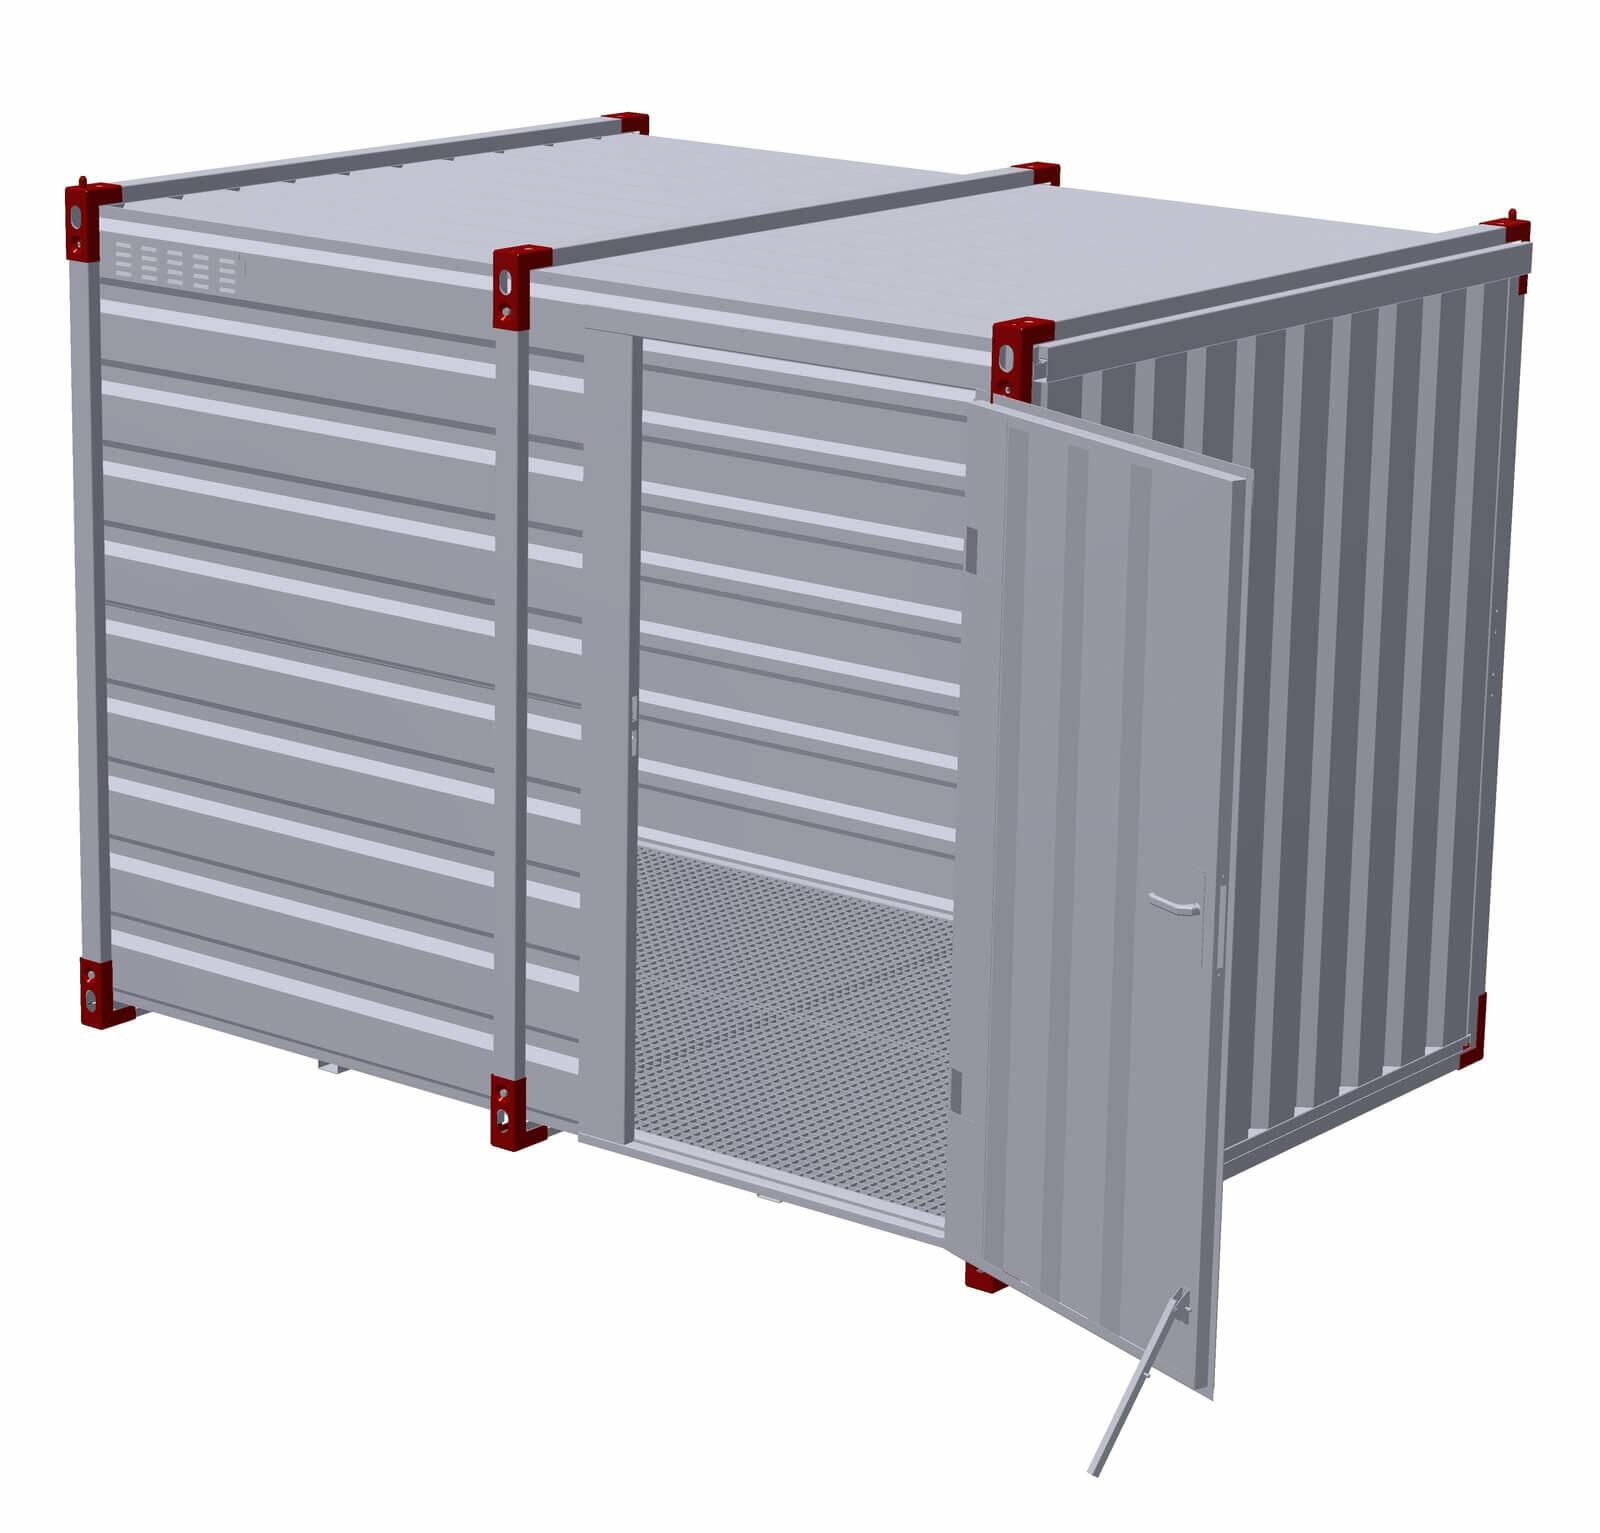 3m COSHH Storage Container